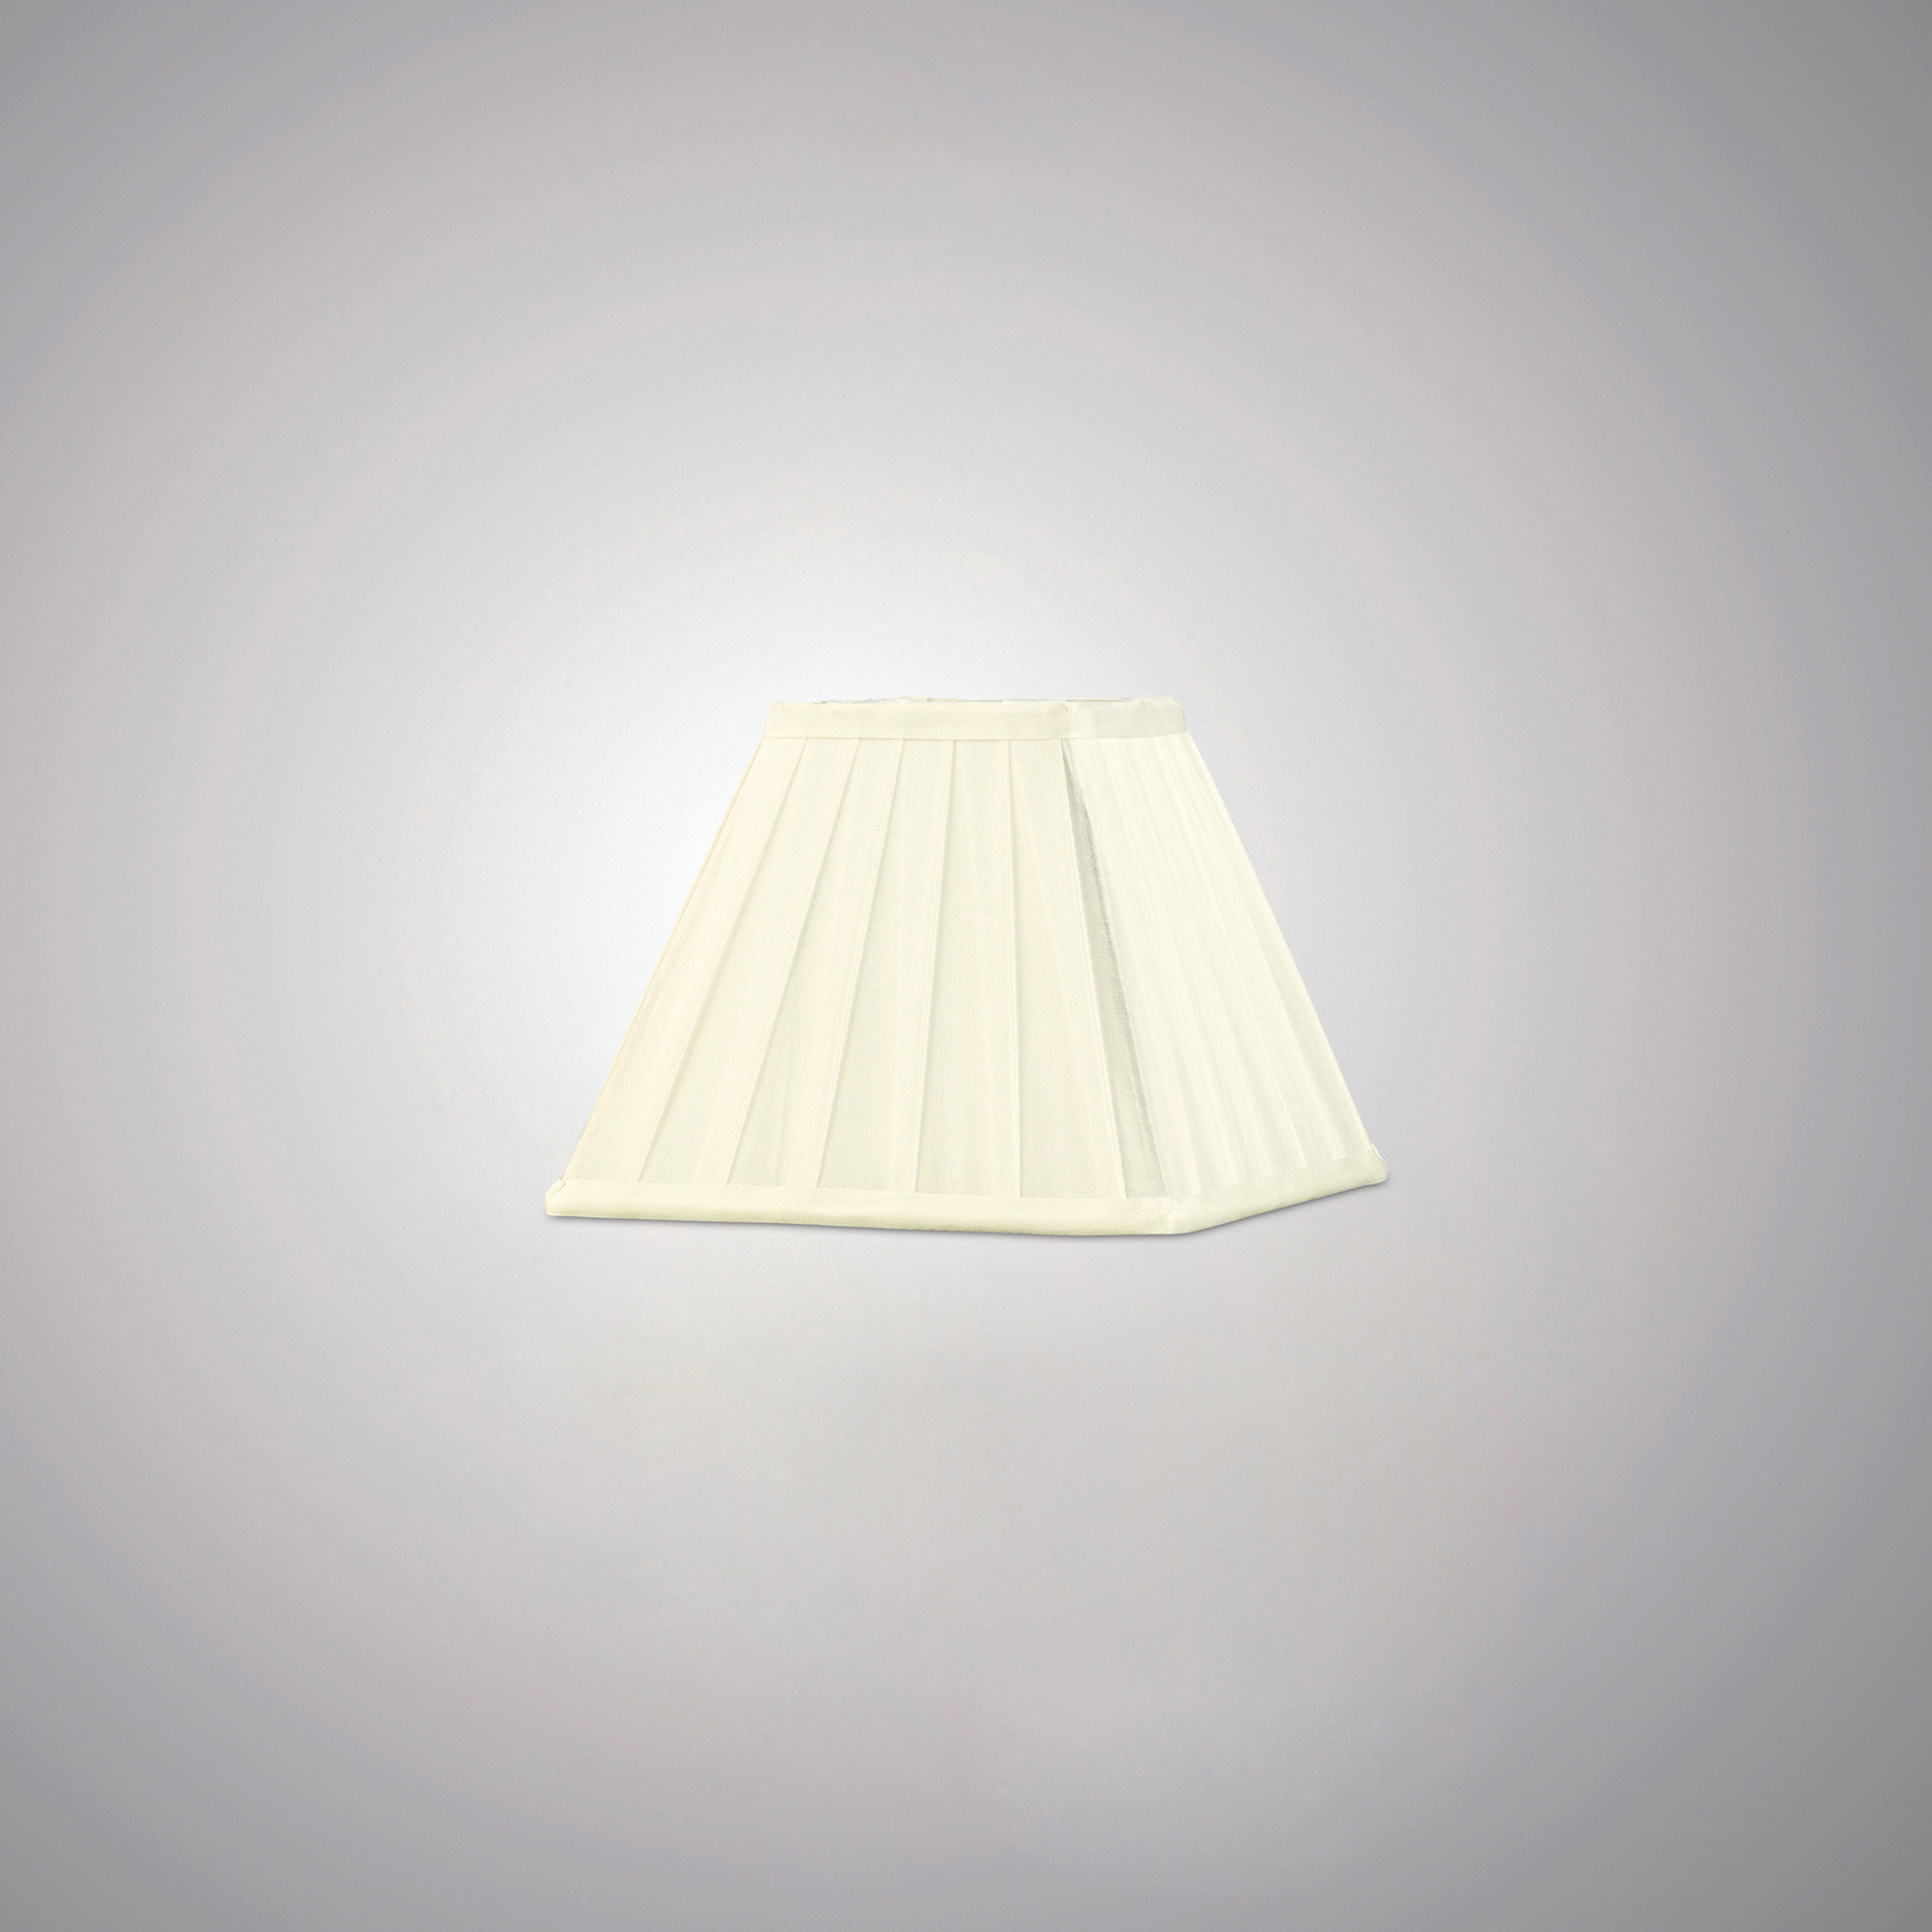 Leela Ivory Shades Diyas Table & Floor Lamp Shades